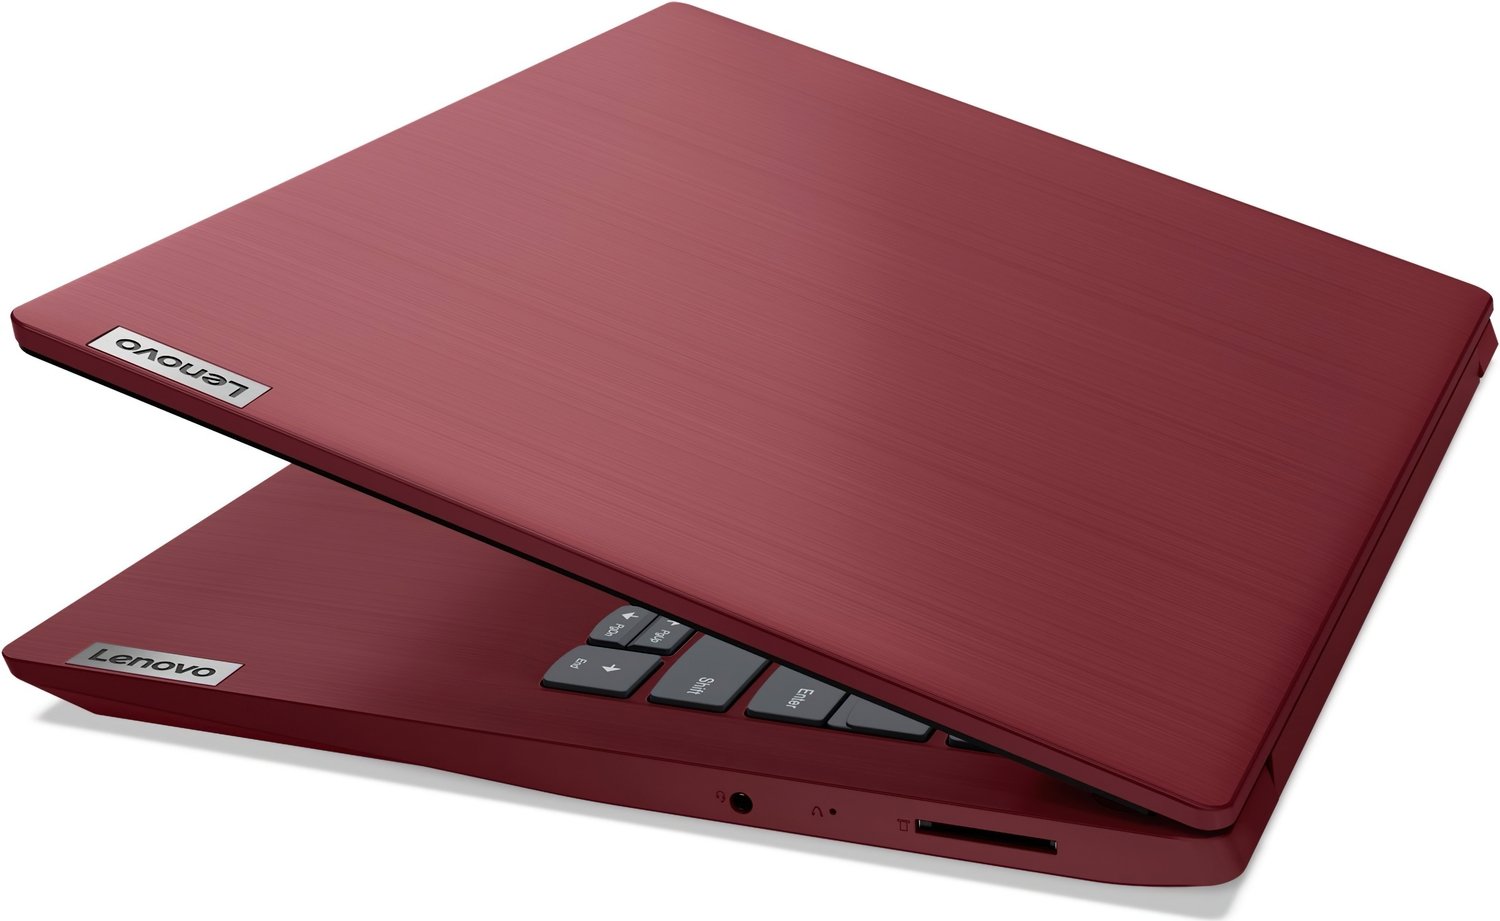 Lenovo IdeaPad 3-14IML05 14" Laptop i5-10210U 256GB 8GB RAM - Very Good Condition